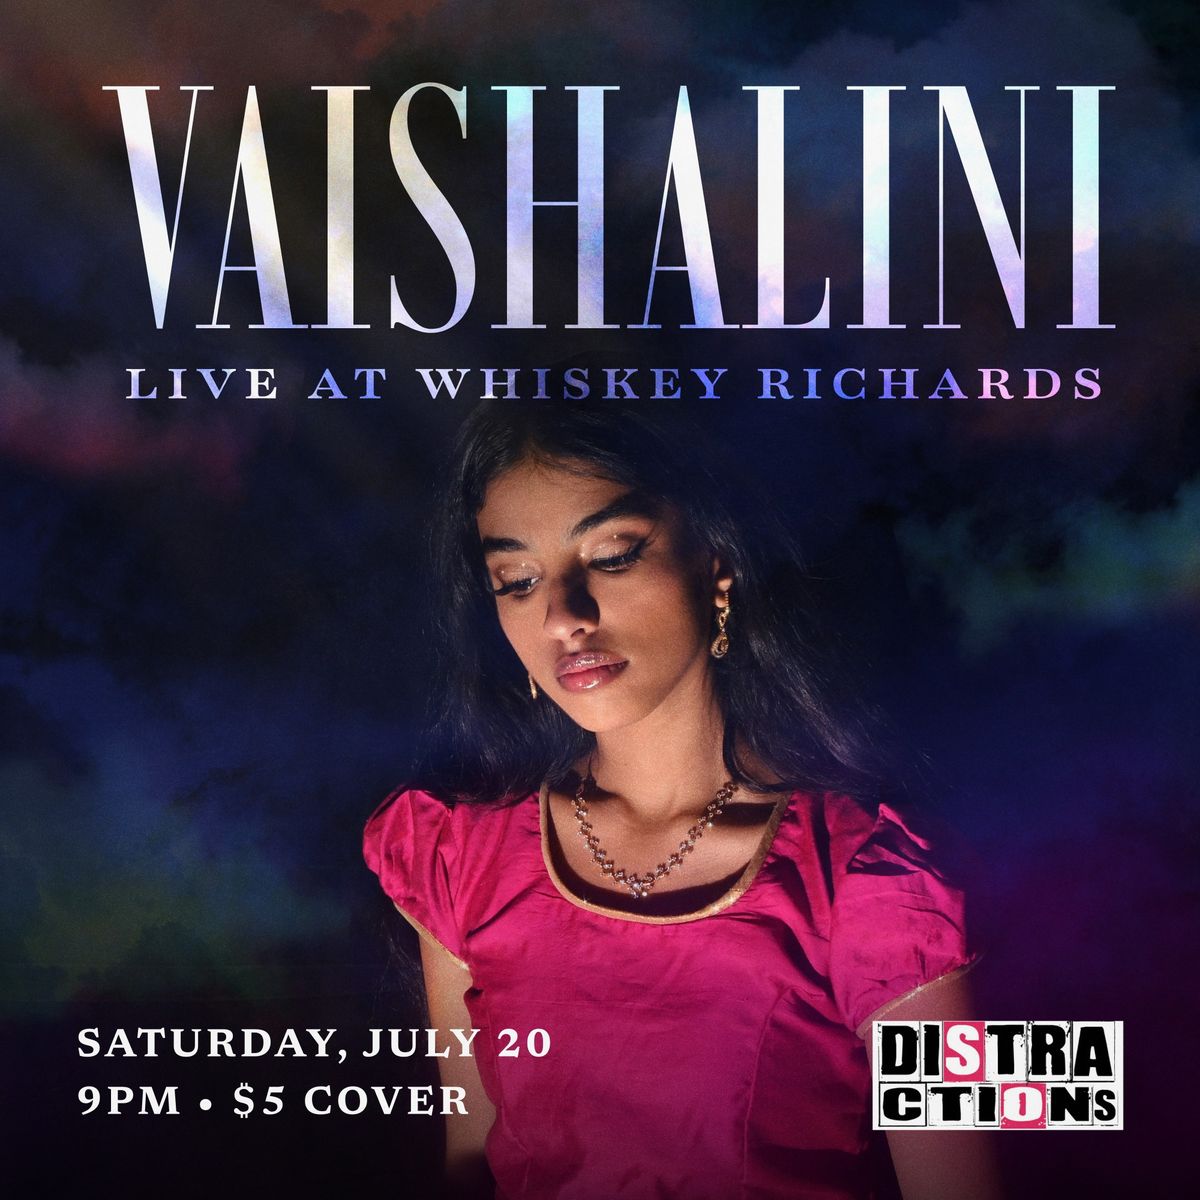 Vaishalini at Whiskey Richards